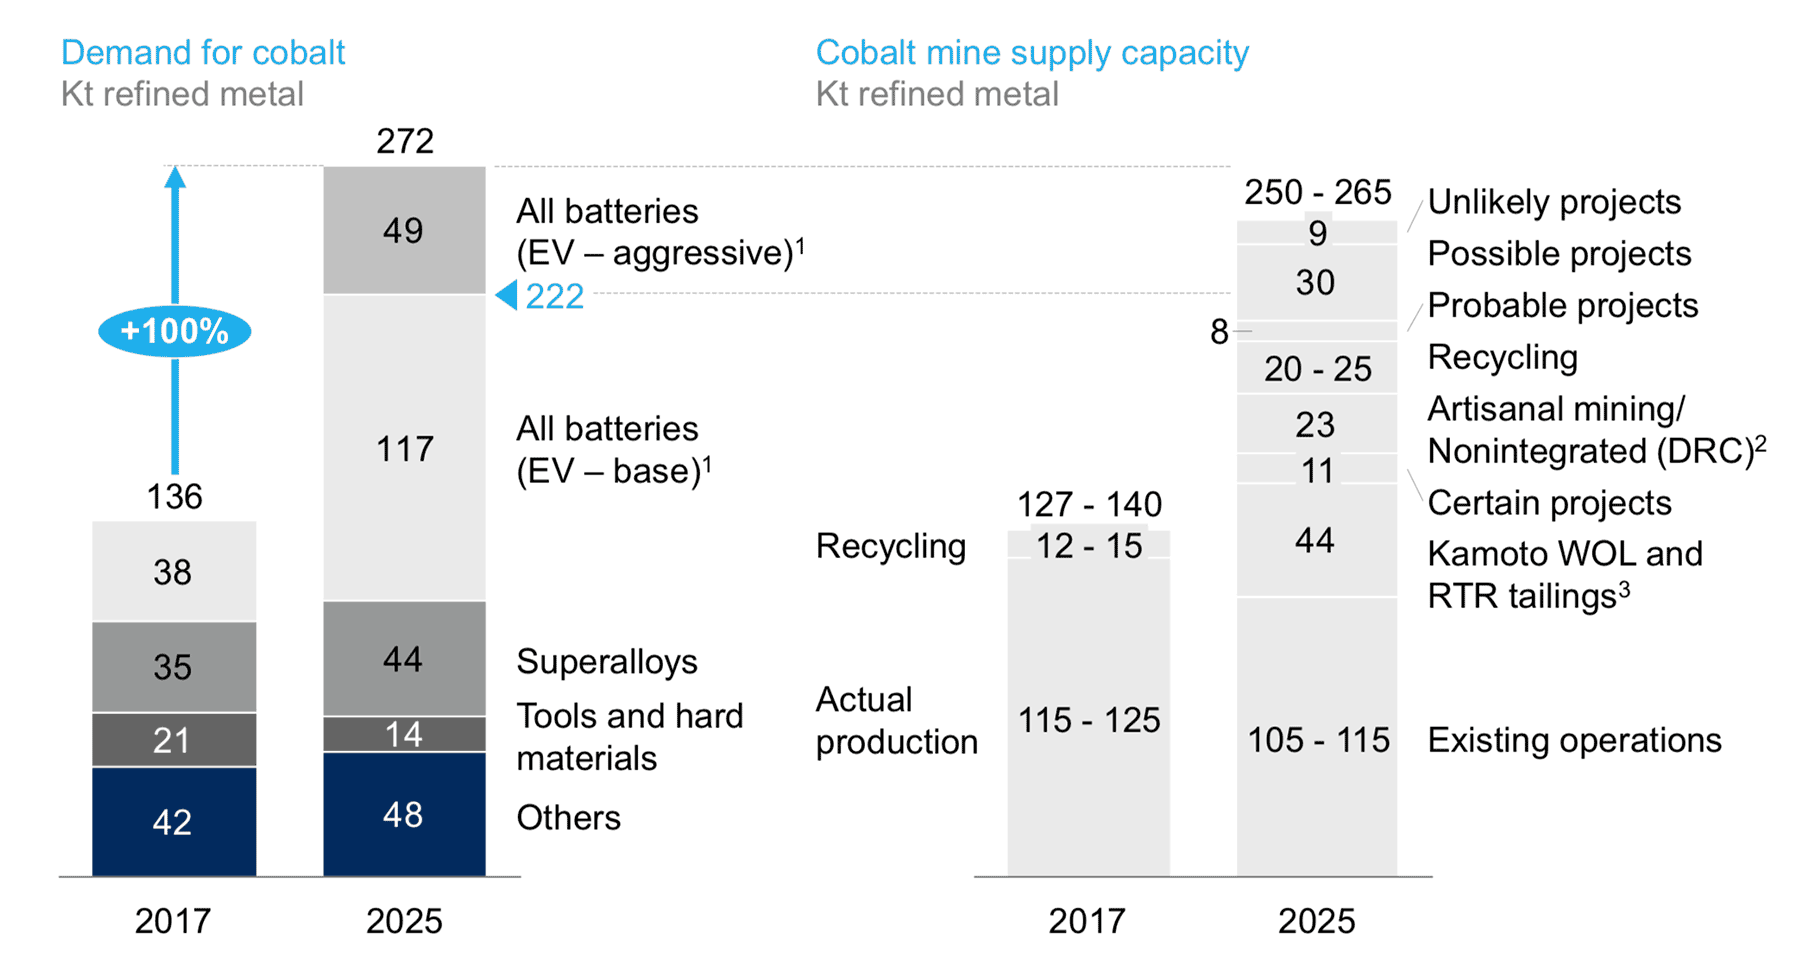 Cobalt supply and demand 2017 vs. 2025 - Source: McKinsey